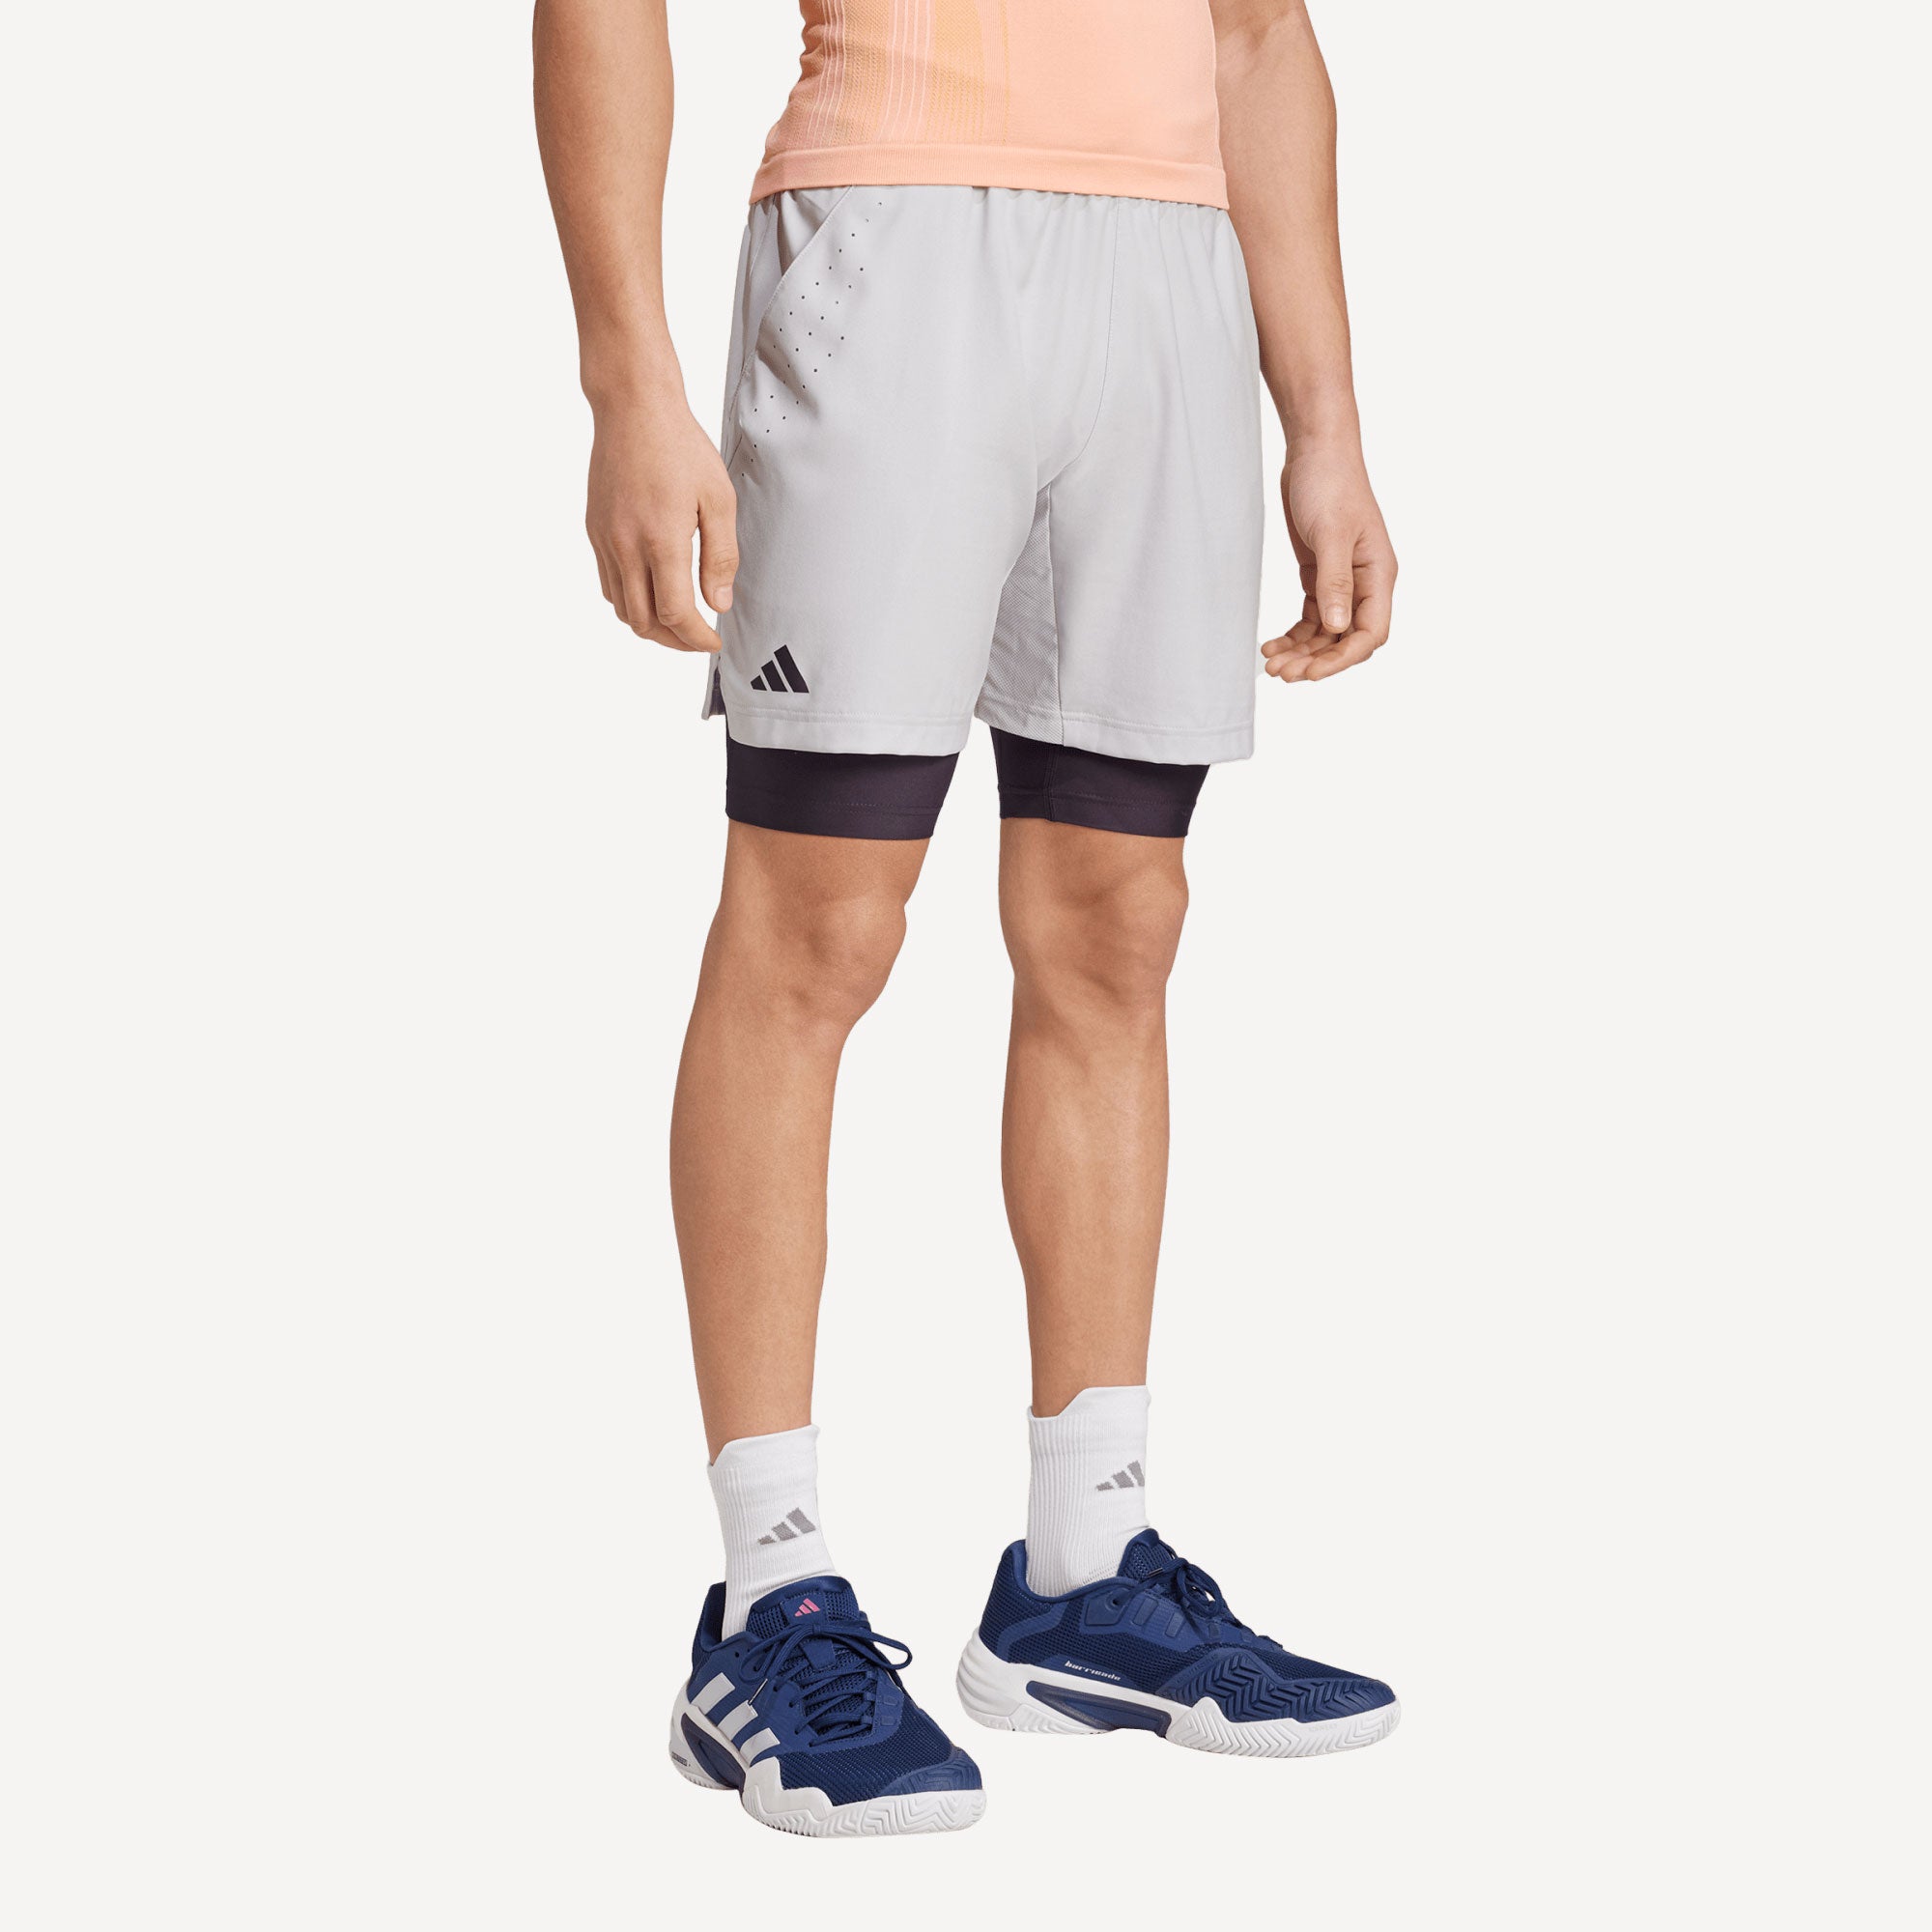 adidas Pro Men's Tennis Shorts and Inner Shorts Set - Grey (1)